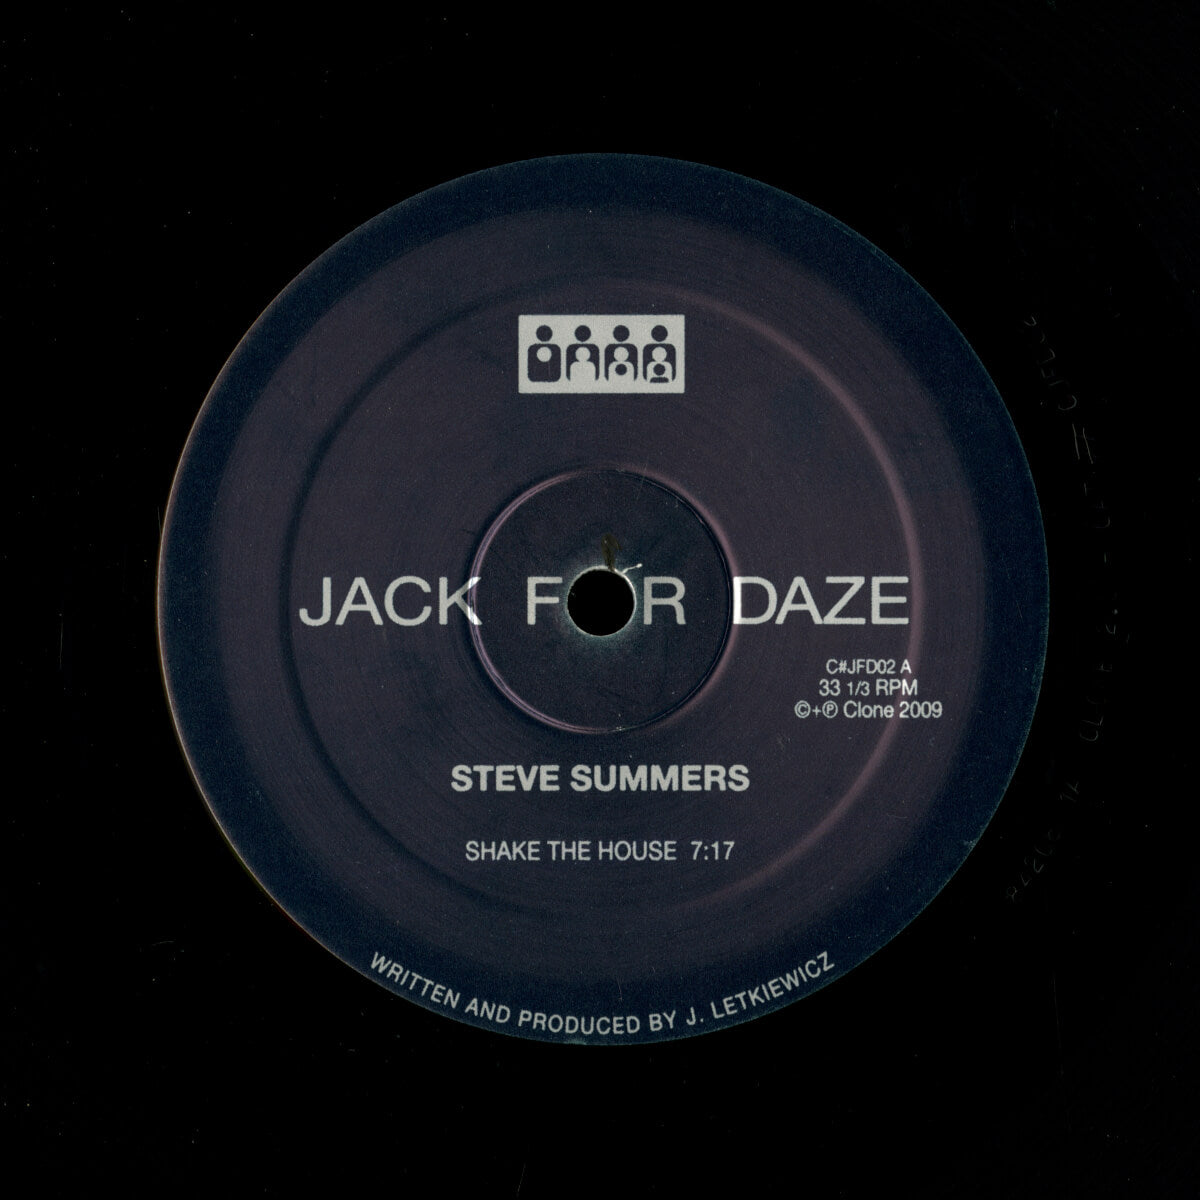 Steve Summers – Shake The House